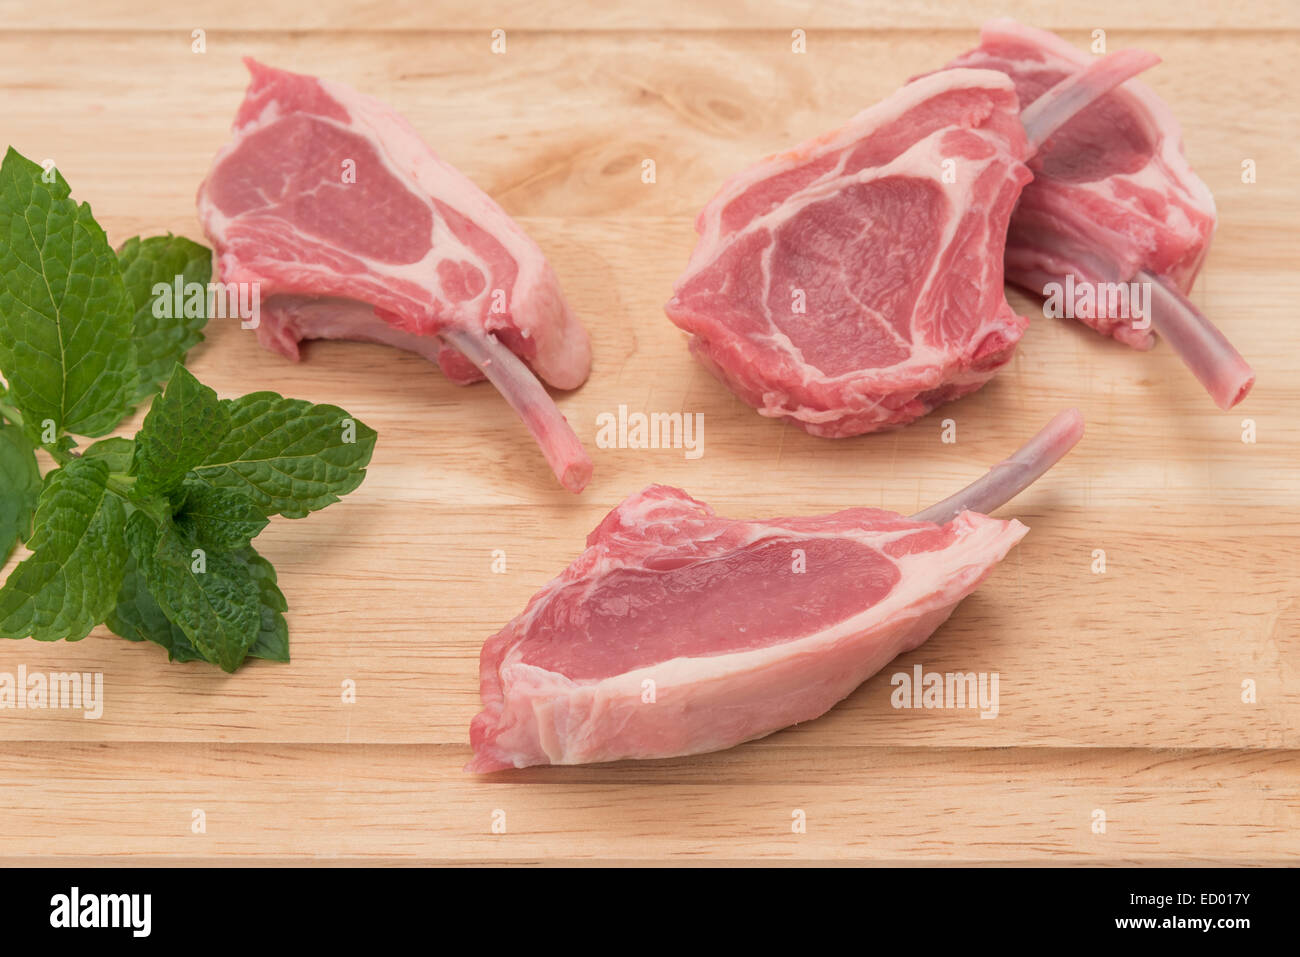 Four raw lamb chop cutlets Stock Photo